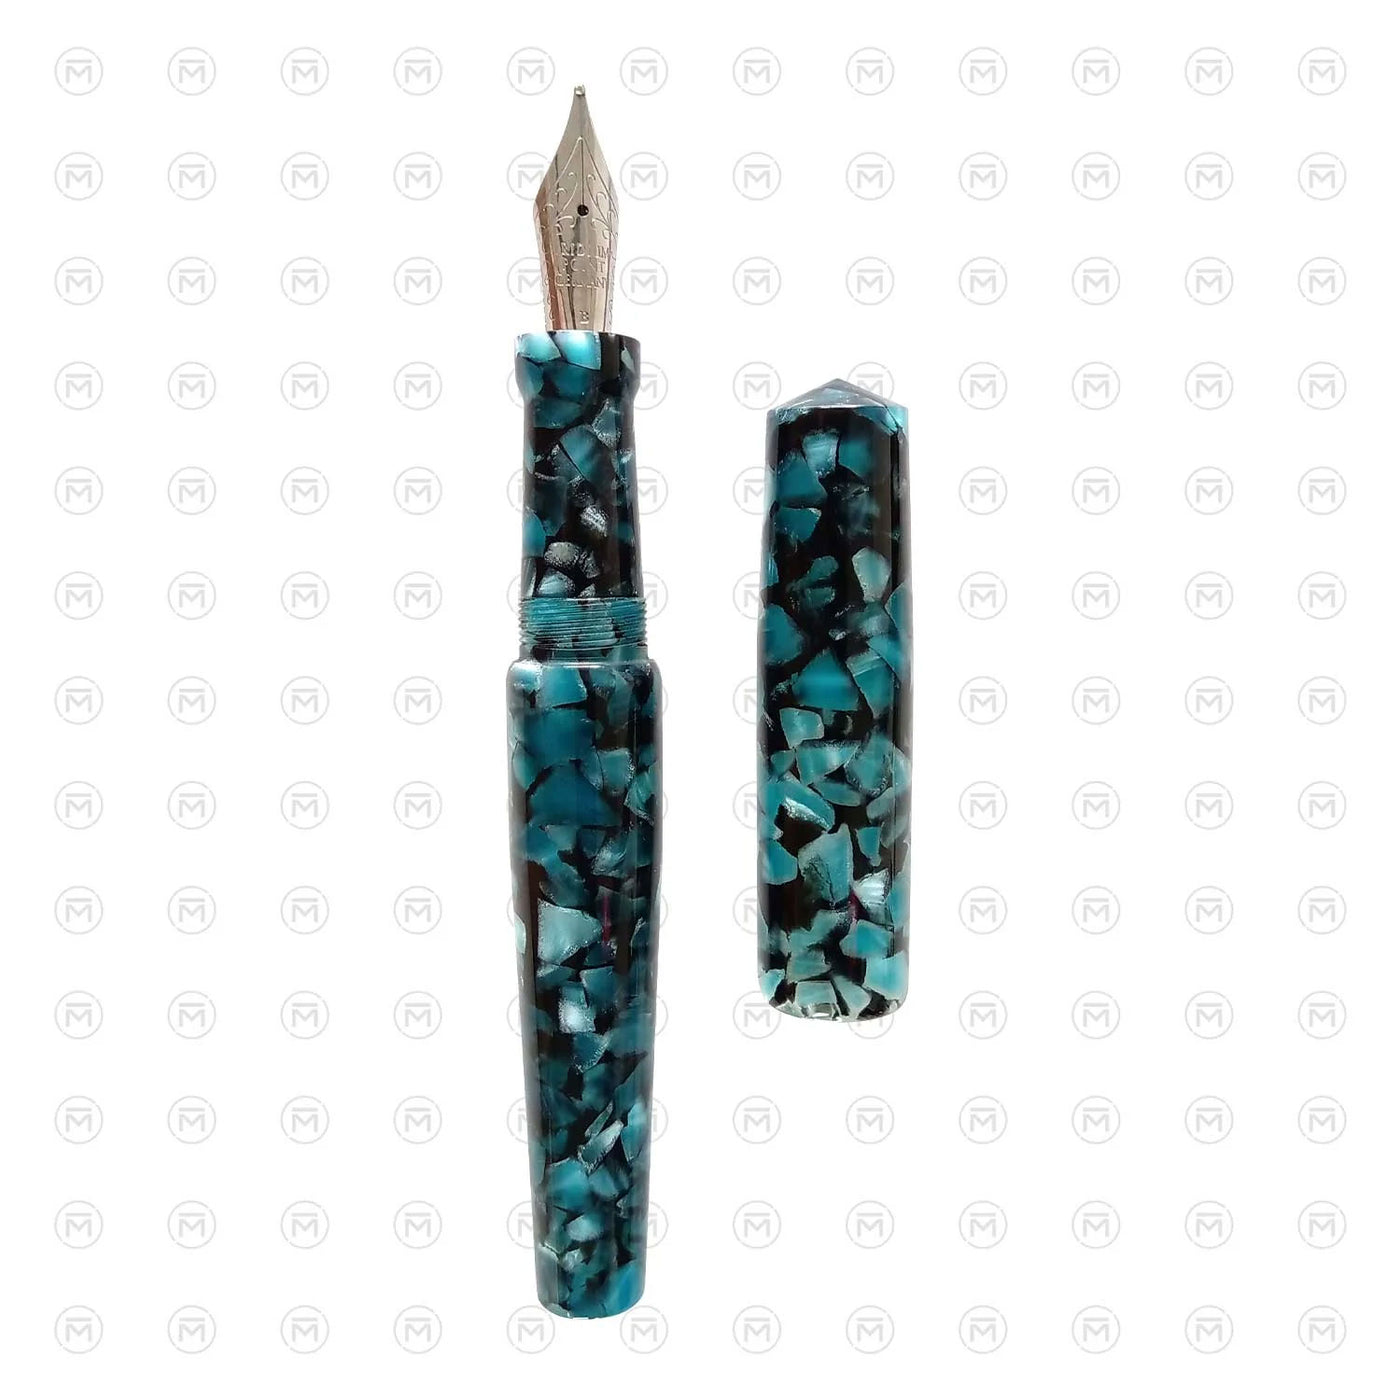 Ranga Abhimanyu Premium Acrylic Fountain Pen Aqua Cracked Ice Steel Nib 3